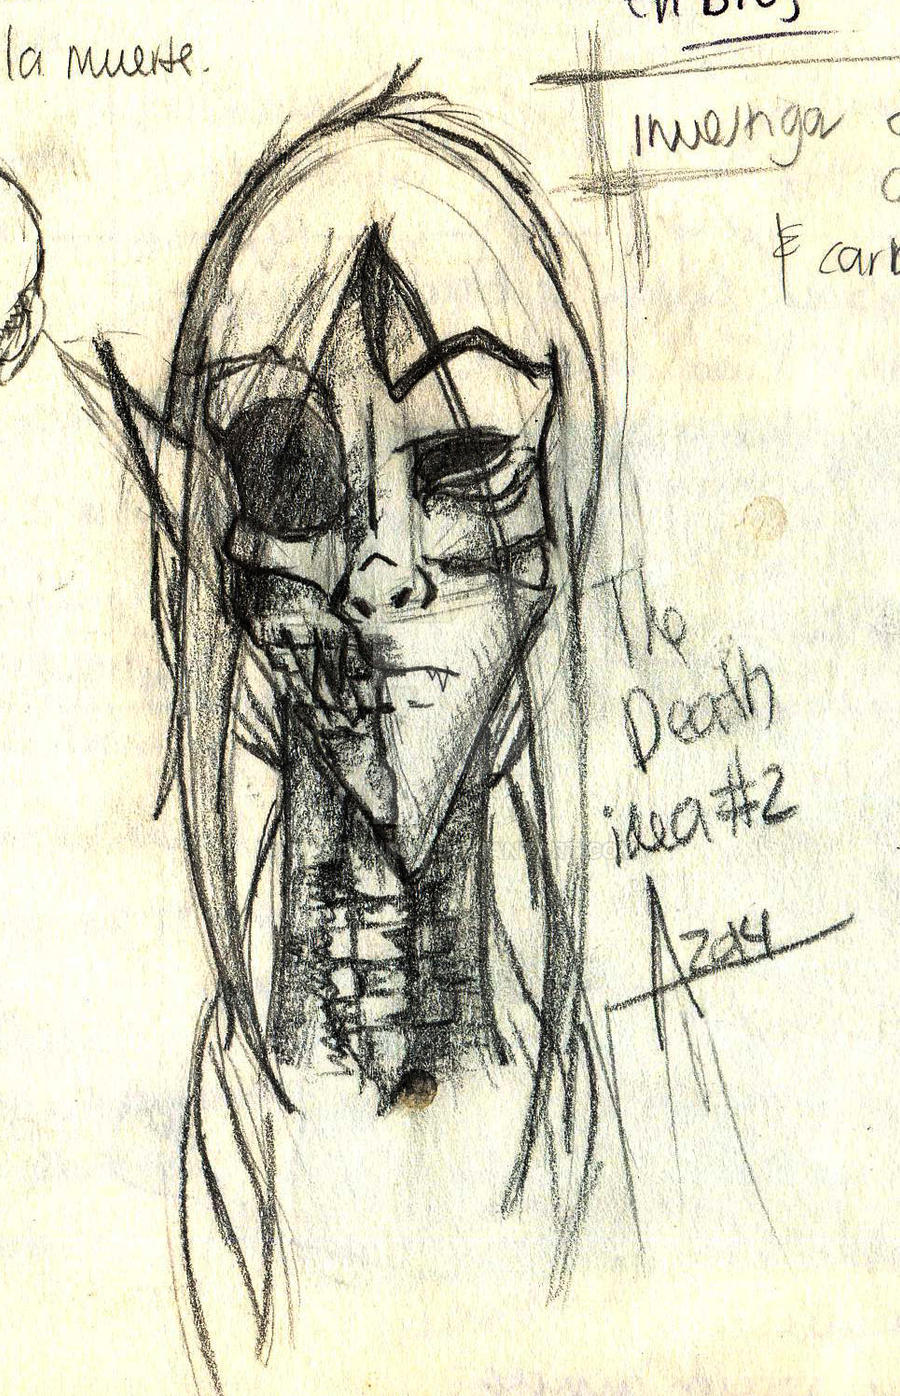 The Death 2nd concept idea